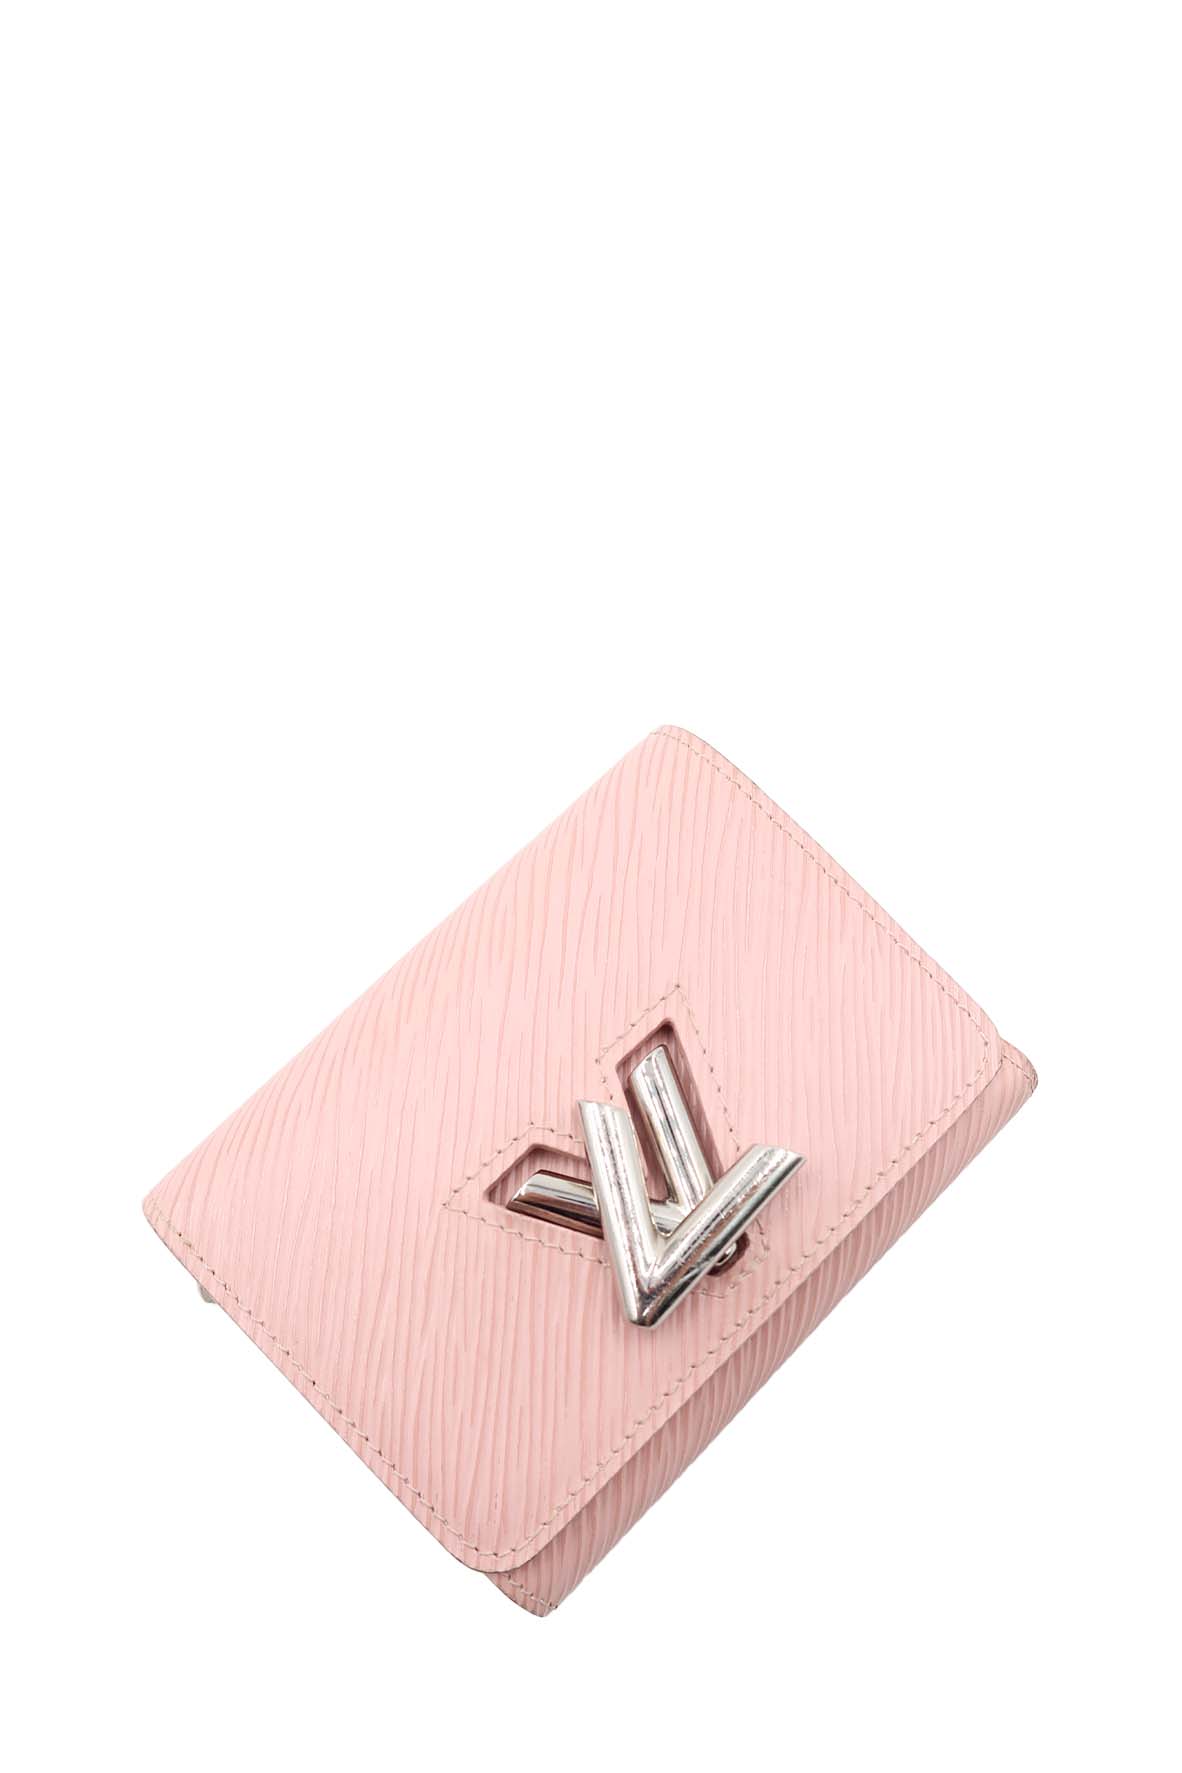 Louis Vuitton Twist Wallet Electric Epi Leather Pink 2365103